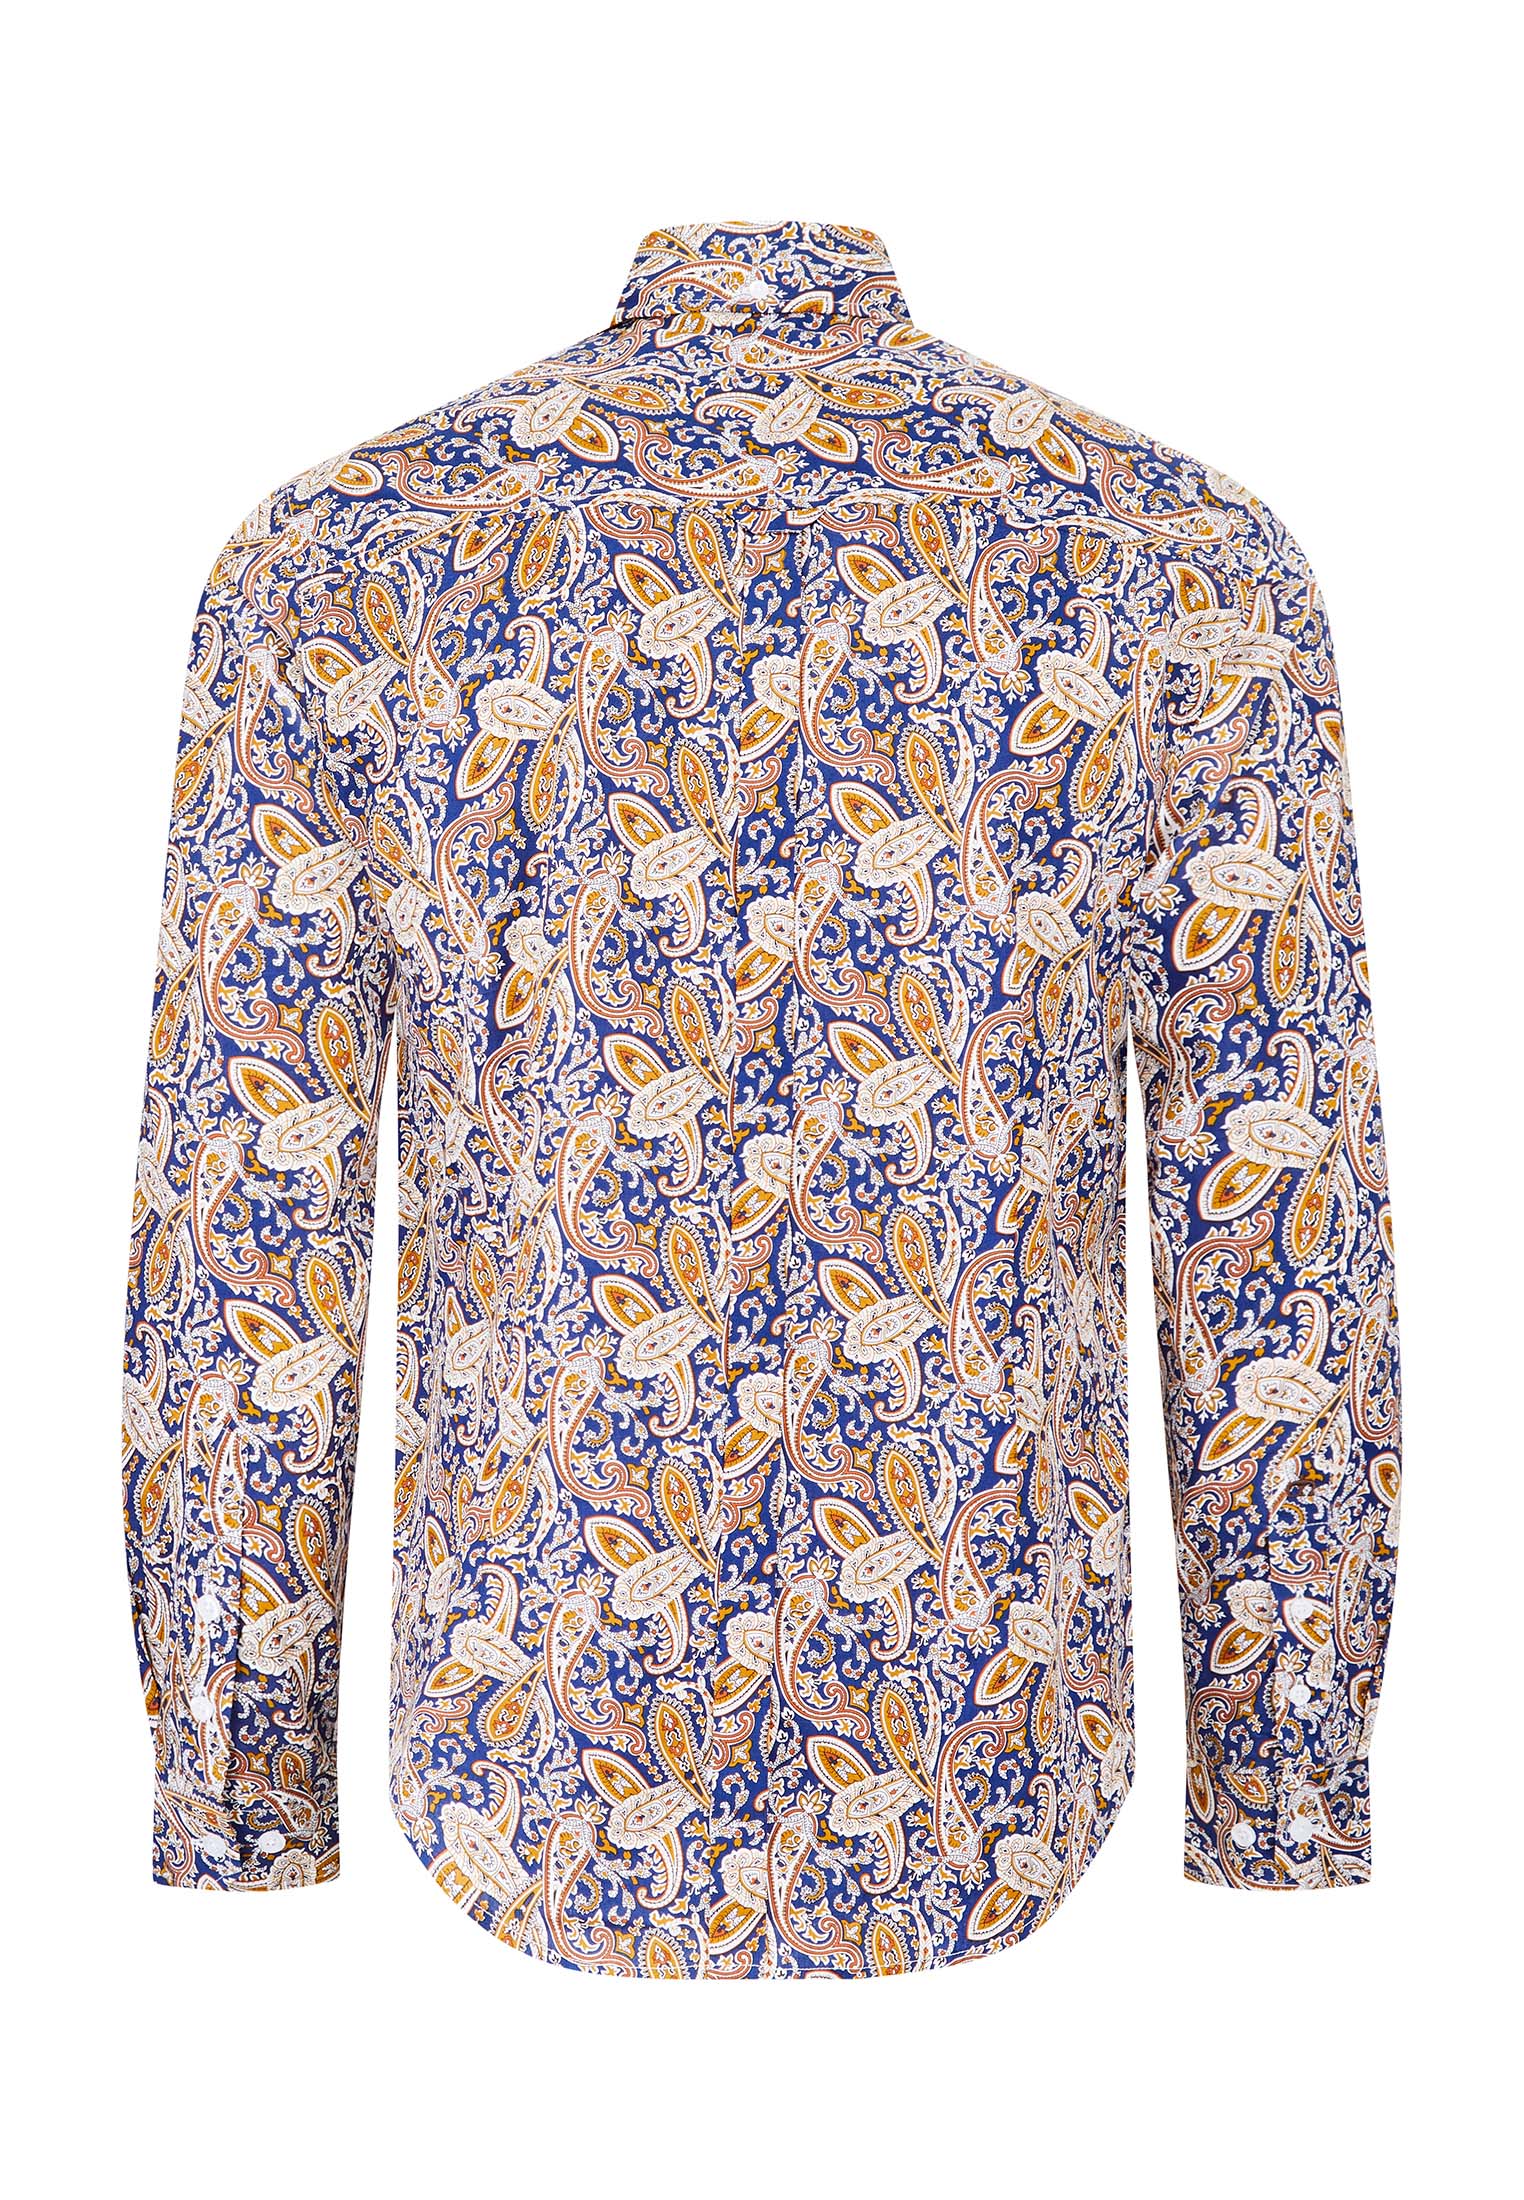 Long Sleeve Paisley Printed Shirt by Merc